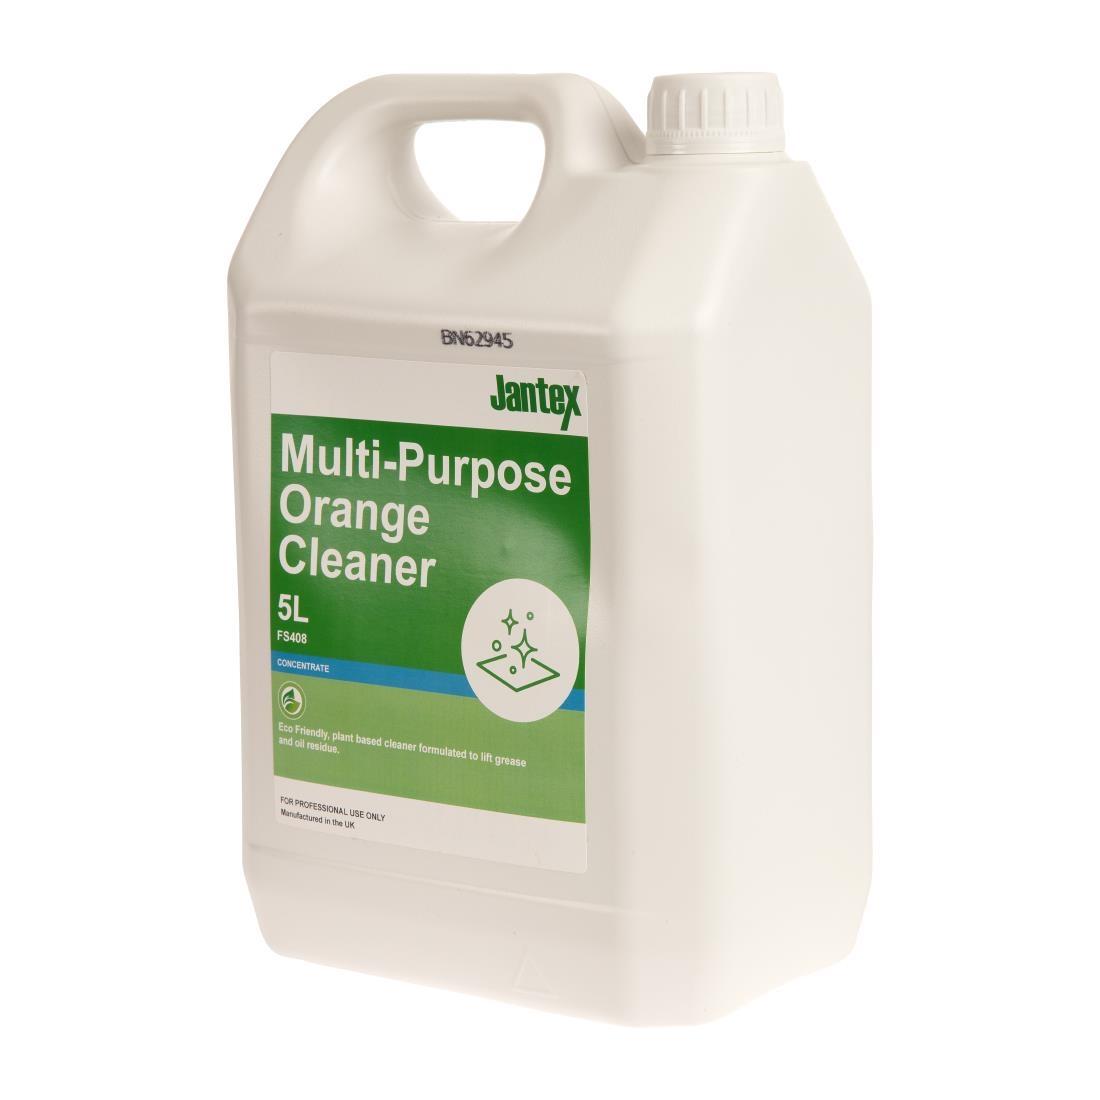 Jantex Green Orange Multipurpose Cleaner Concentrate 5Ltr - FS408  - 2